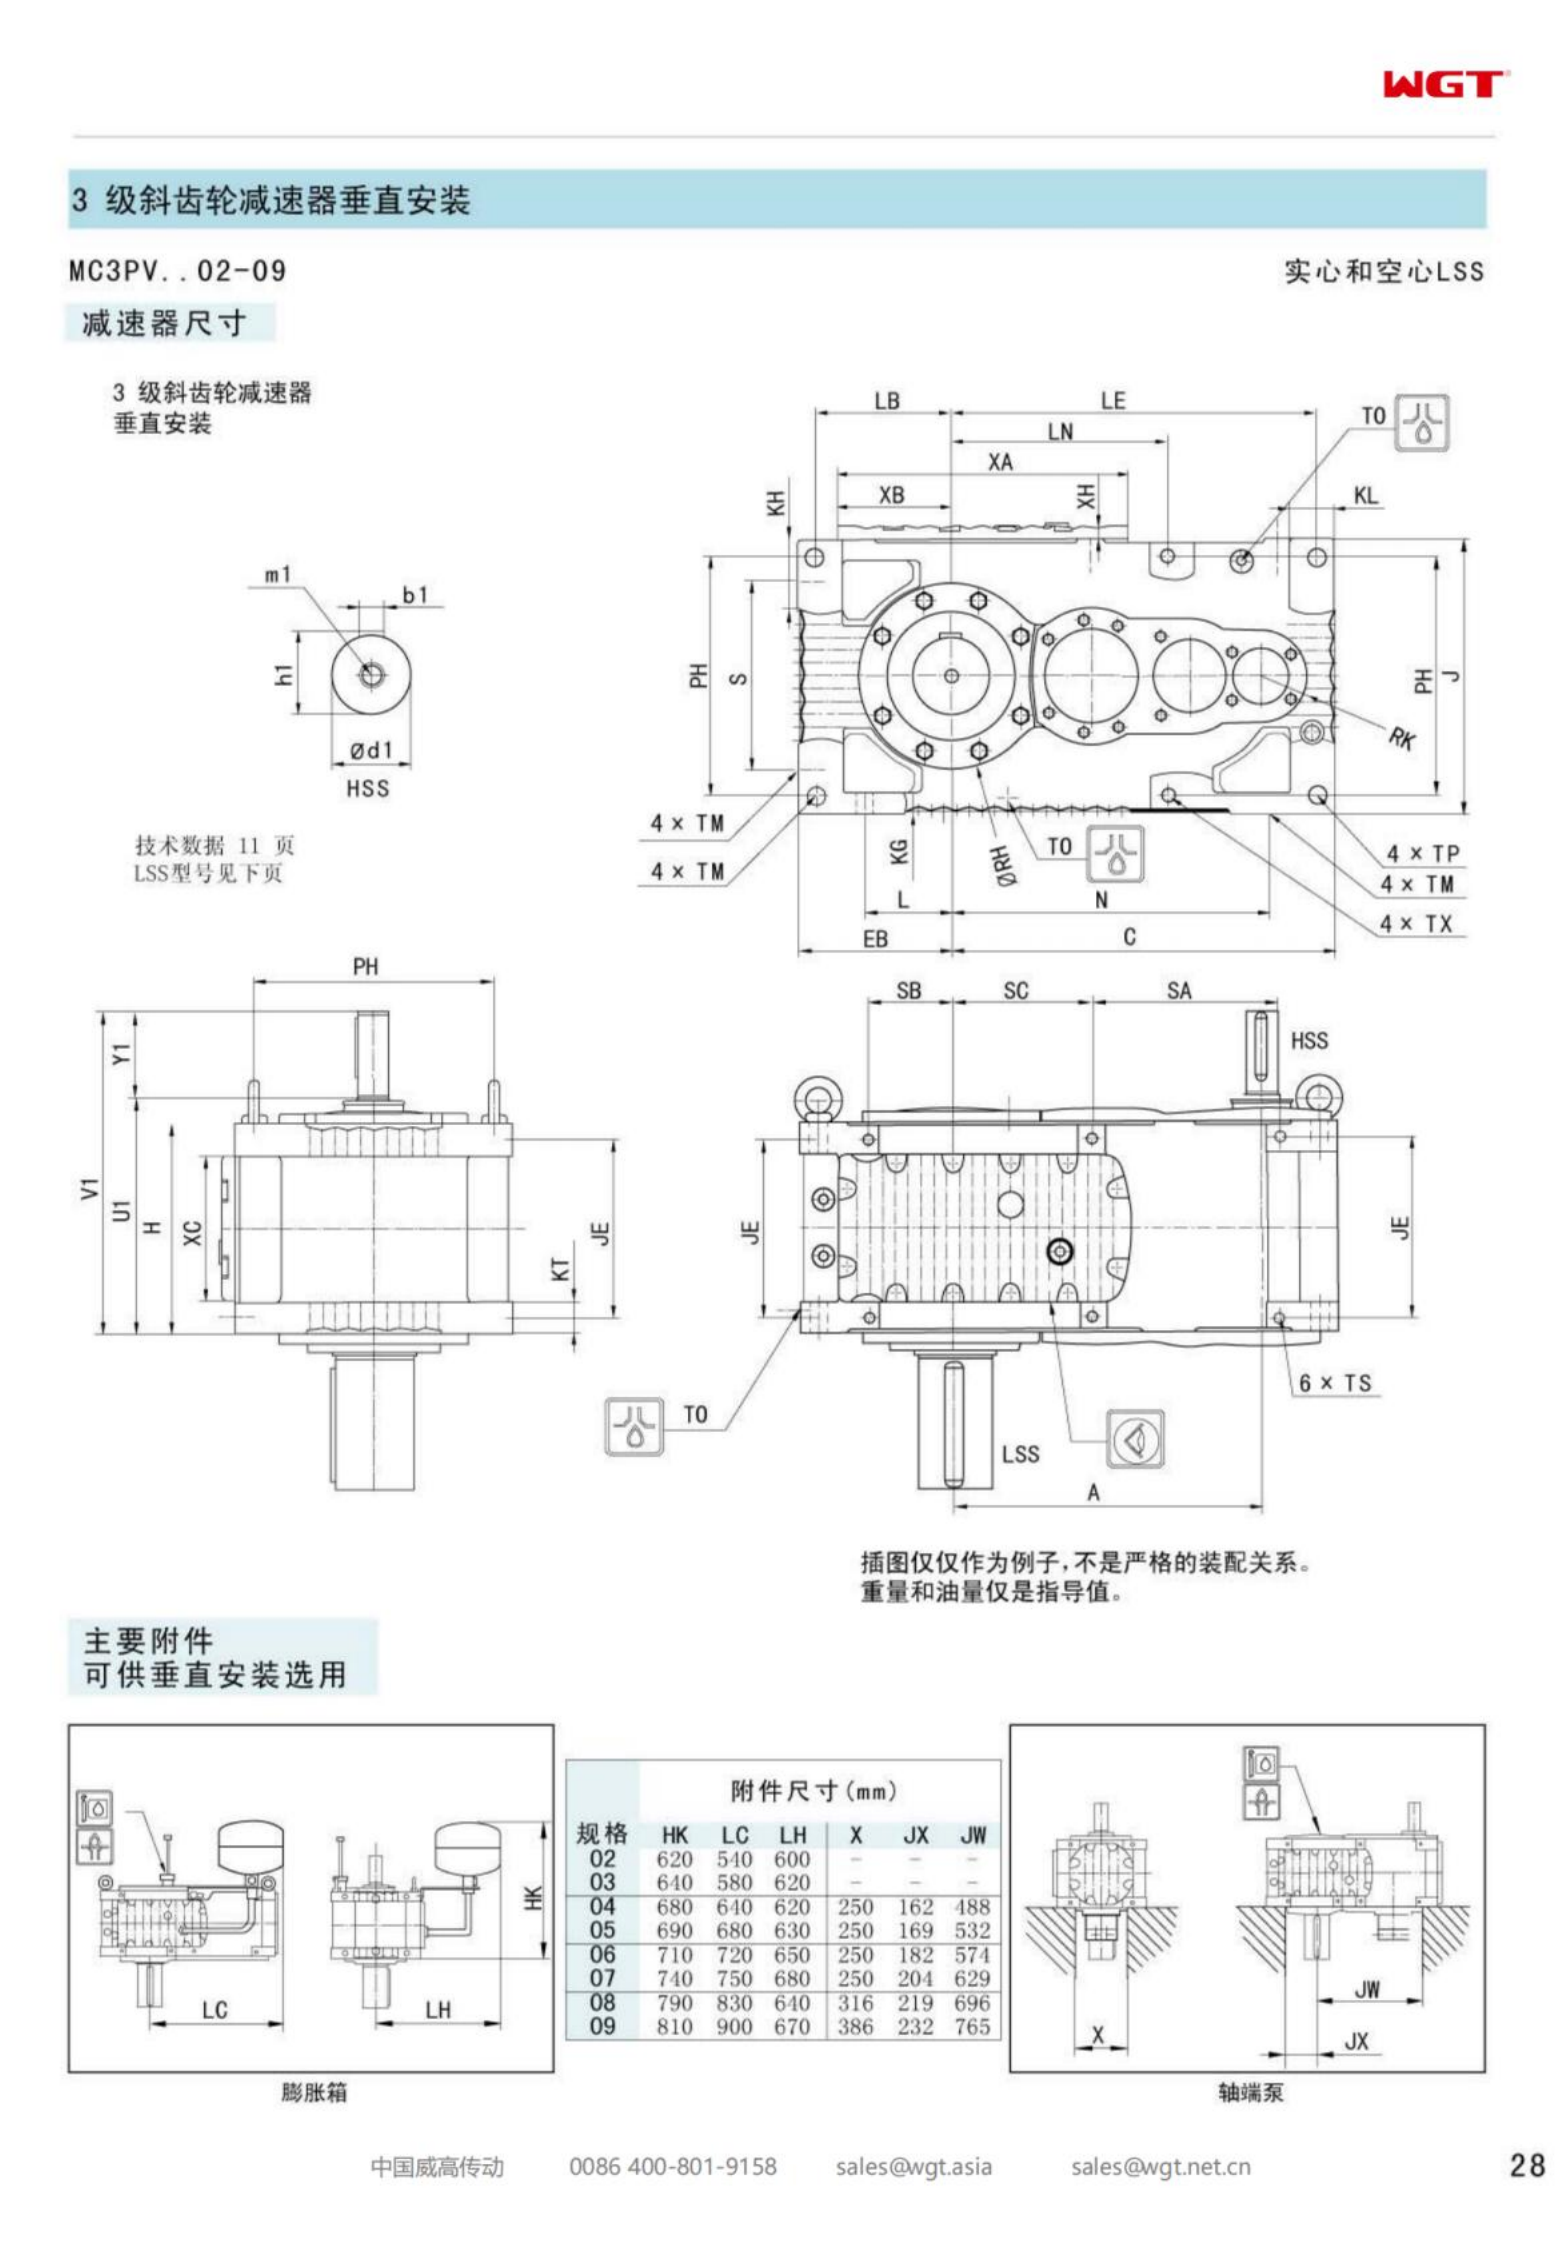 MC3PVST09 replaces _SEW_MC_Series gearbox (patent)